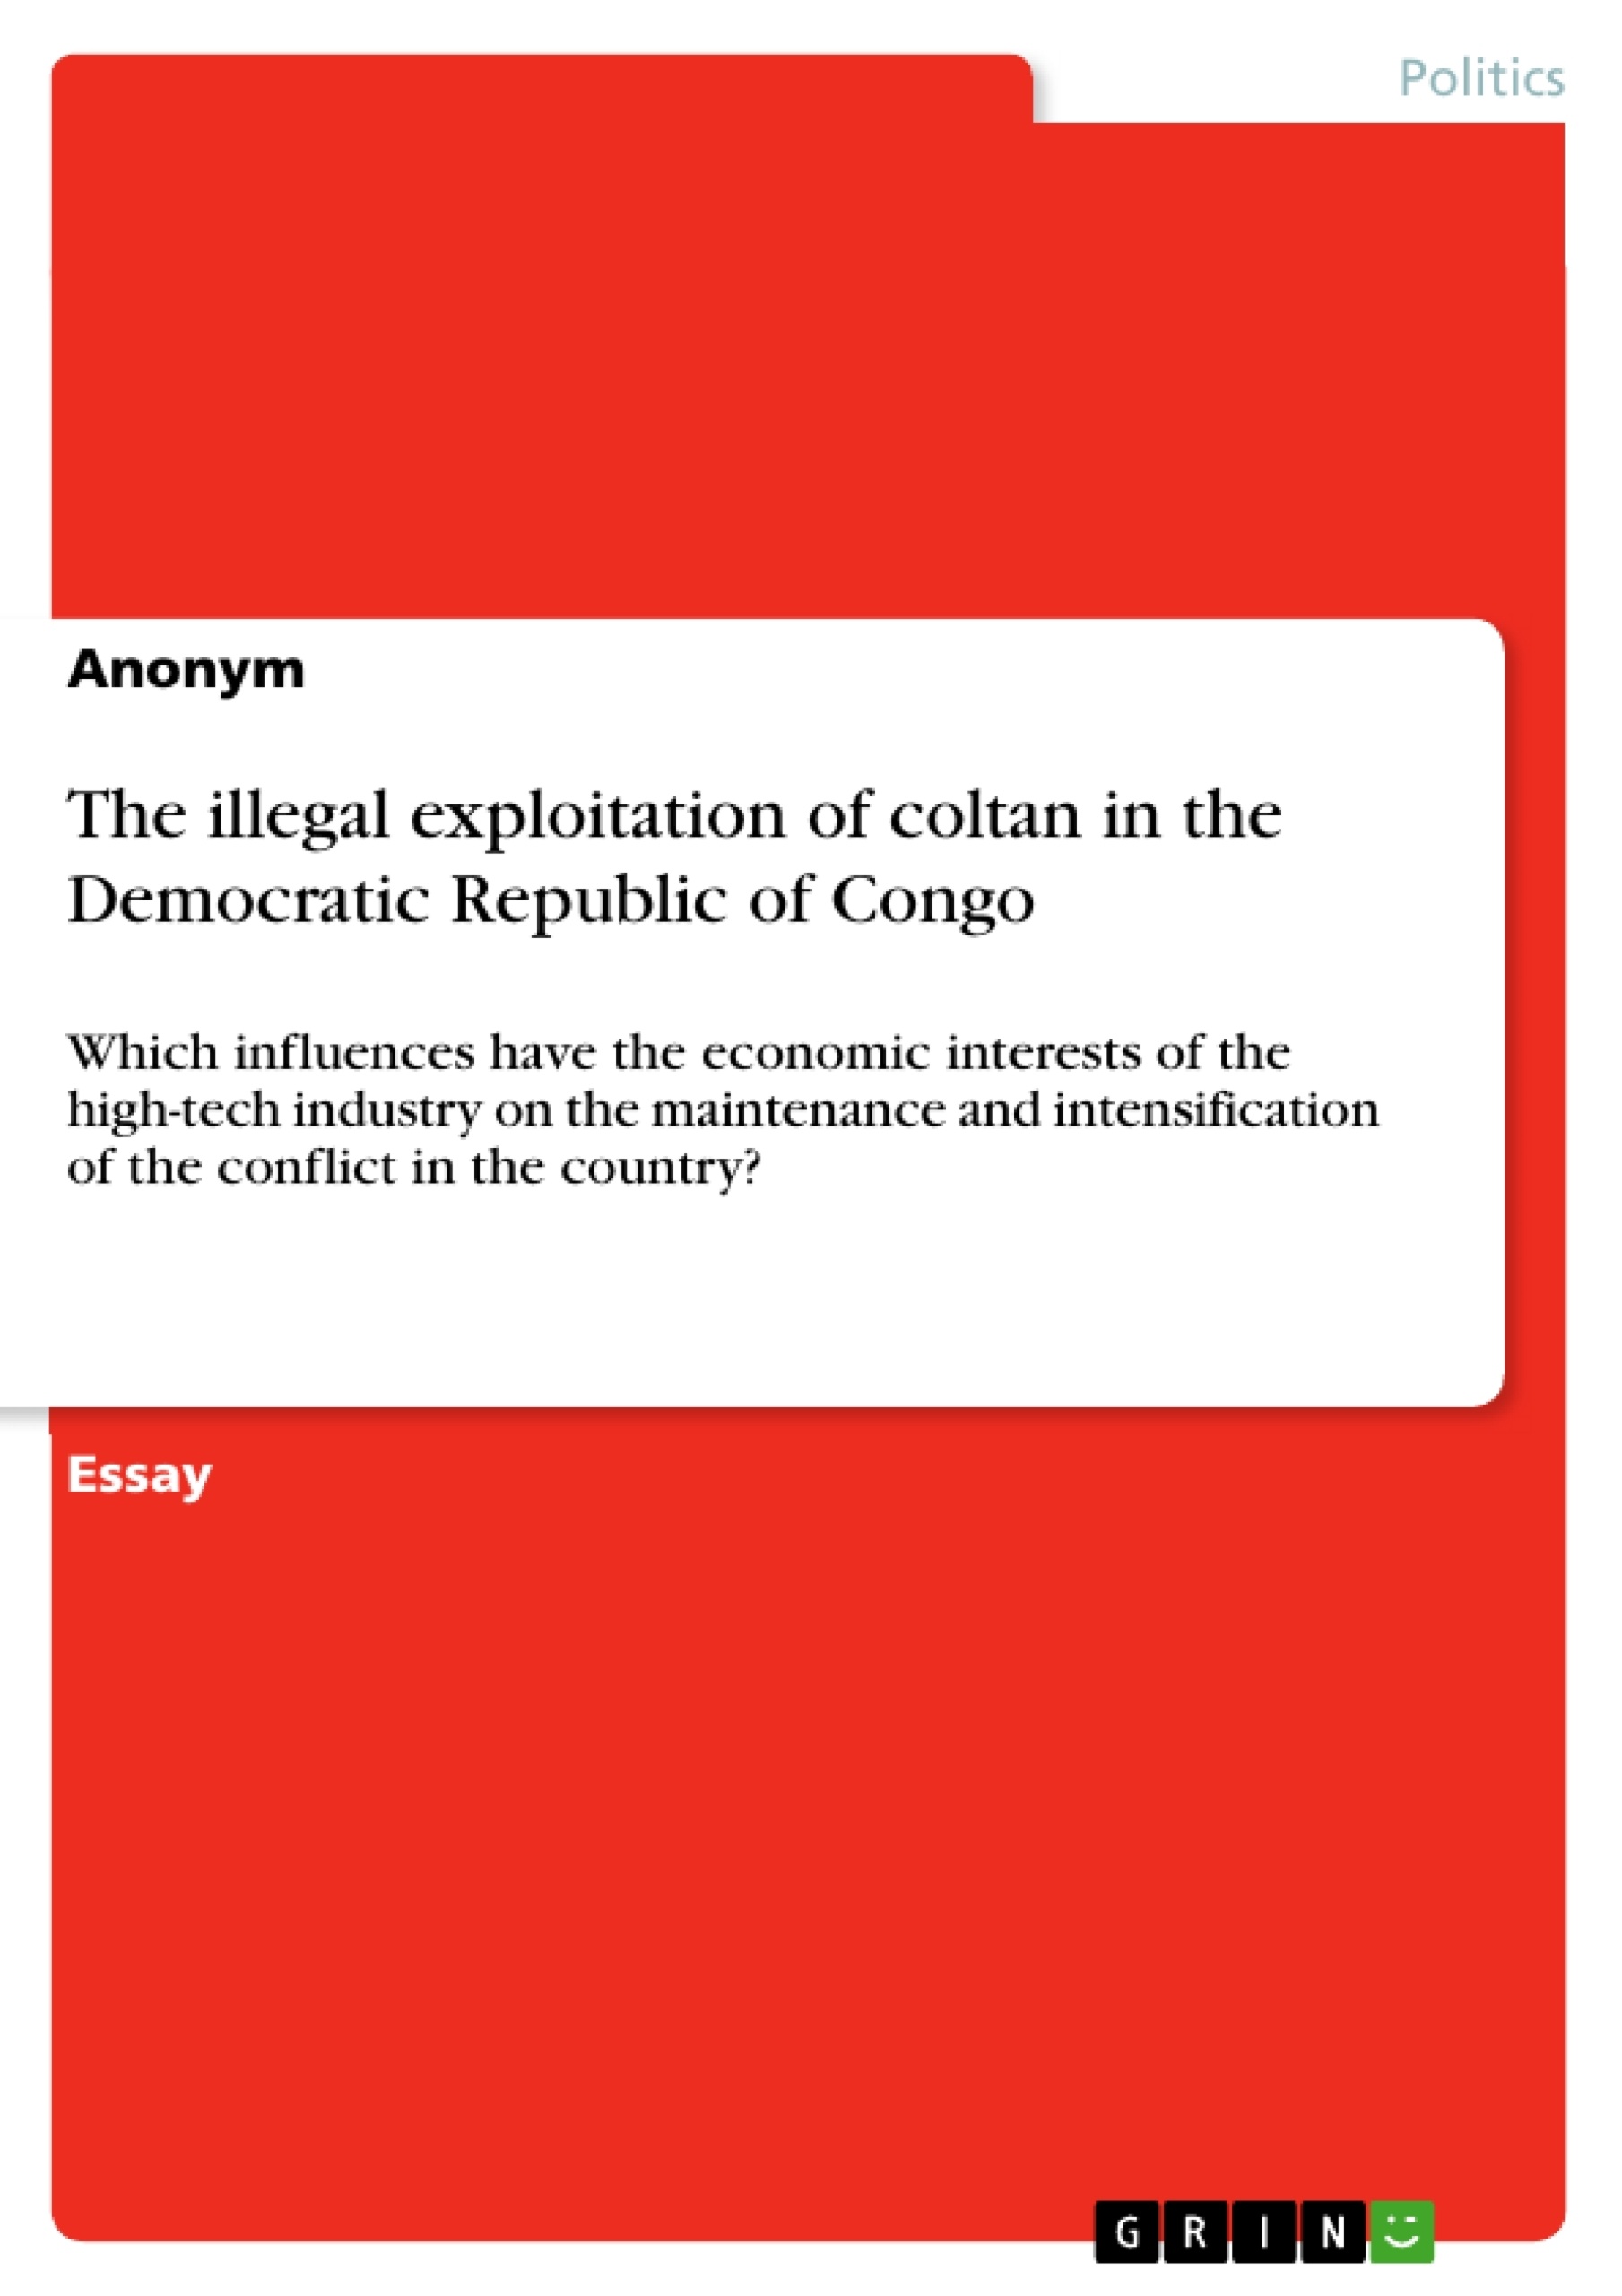 Title: The illegal exploitation of coltan in the Democratic Republic of Congo